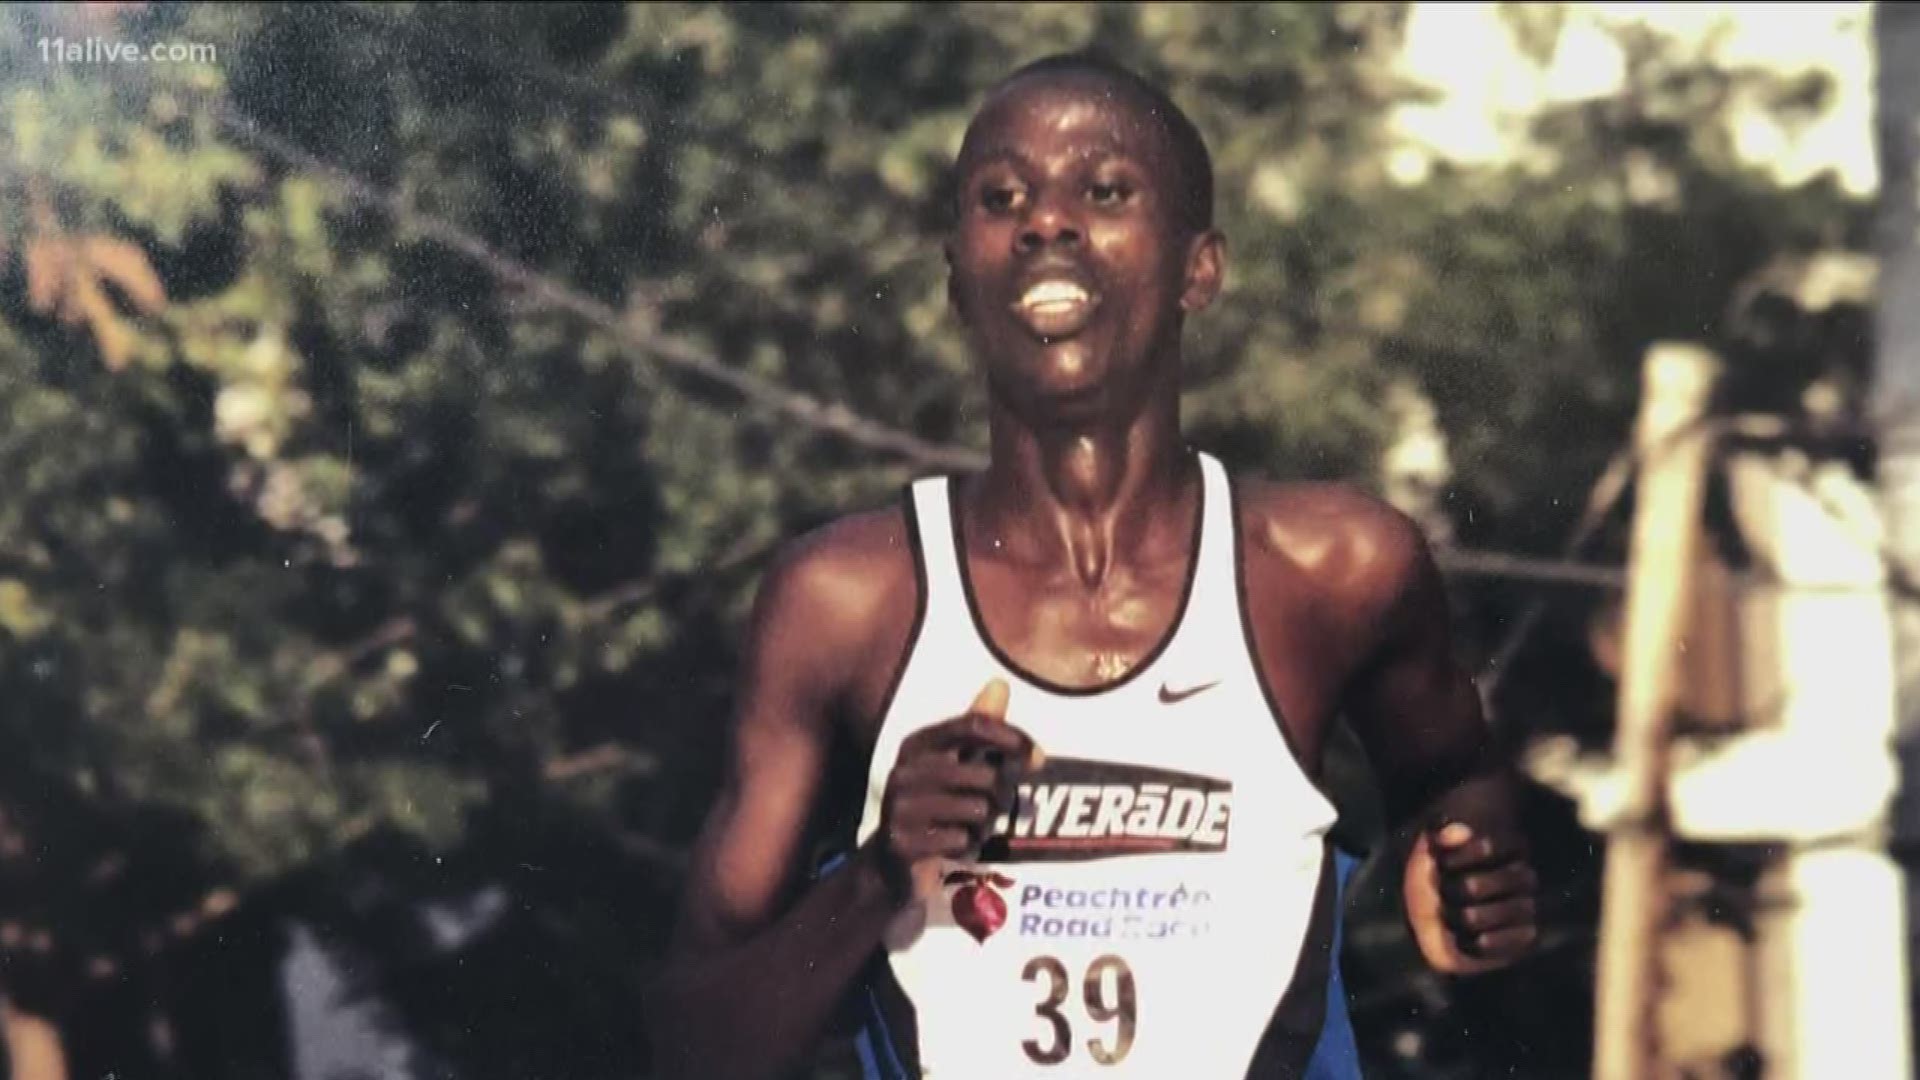 Joseph Kimani's record time of 27:04 was run back in 1996